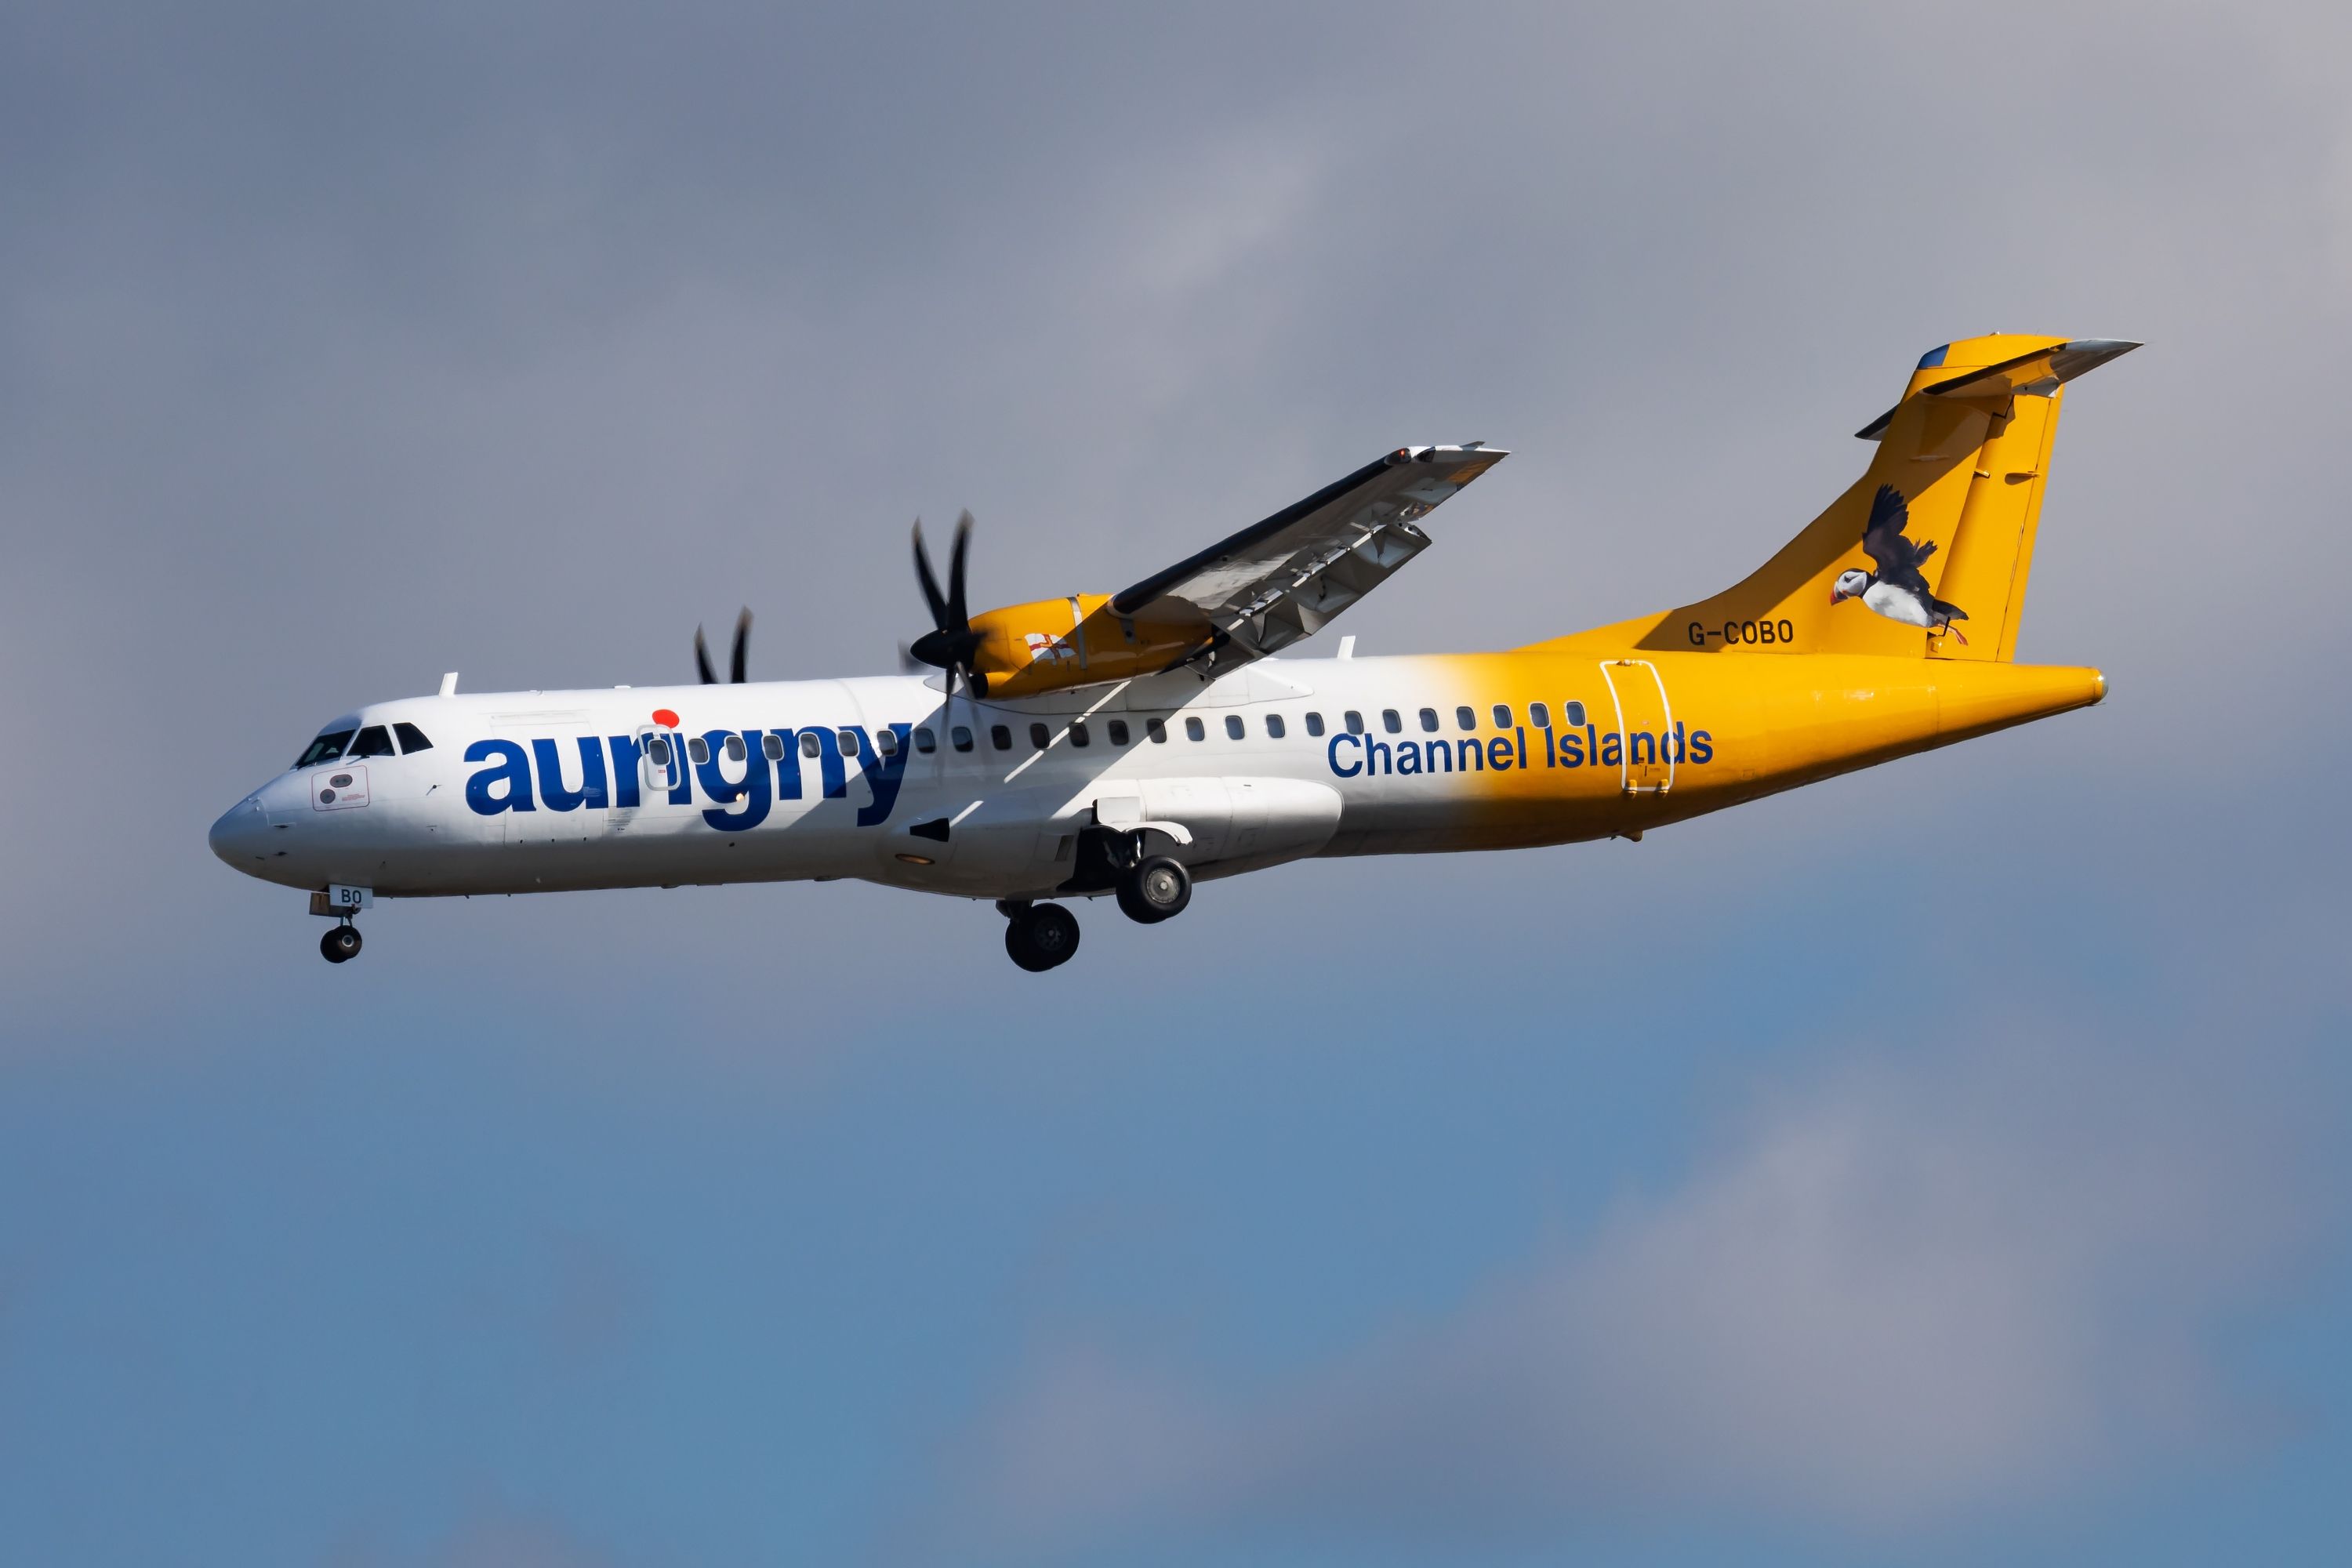 An Aurigny Air Services ATR aircraft 